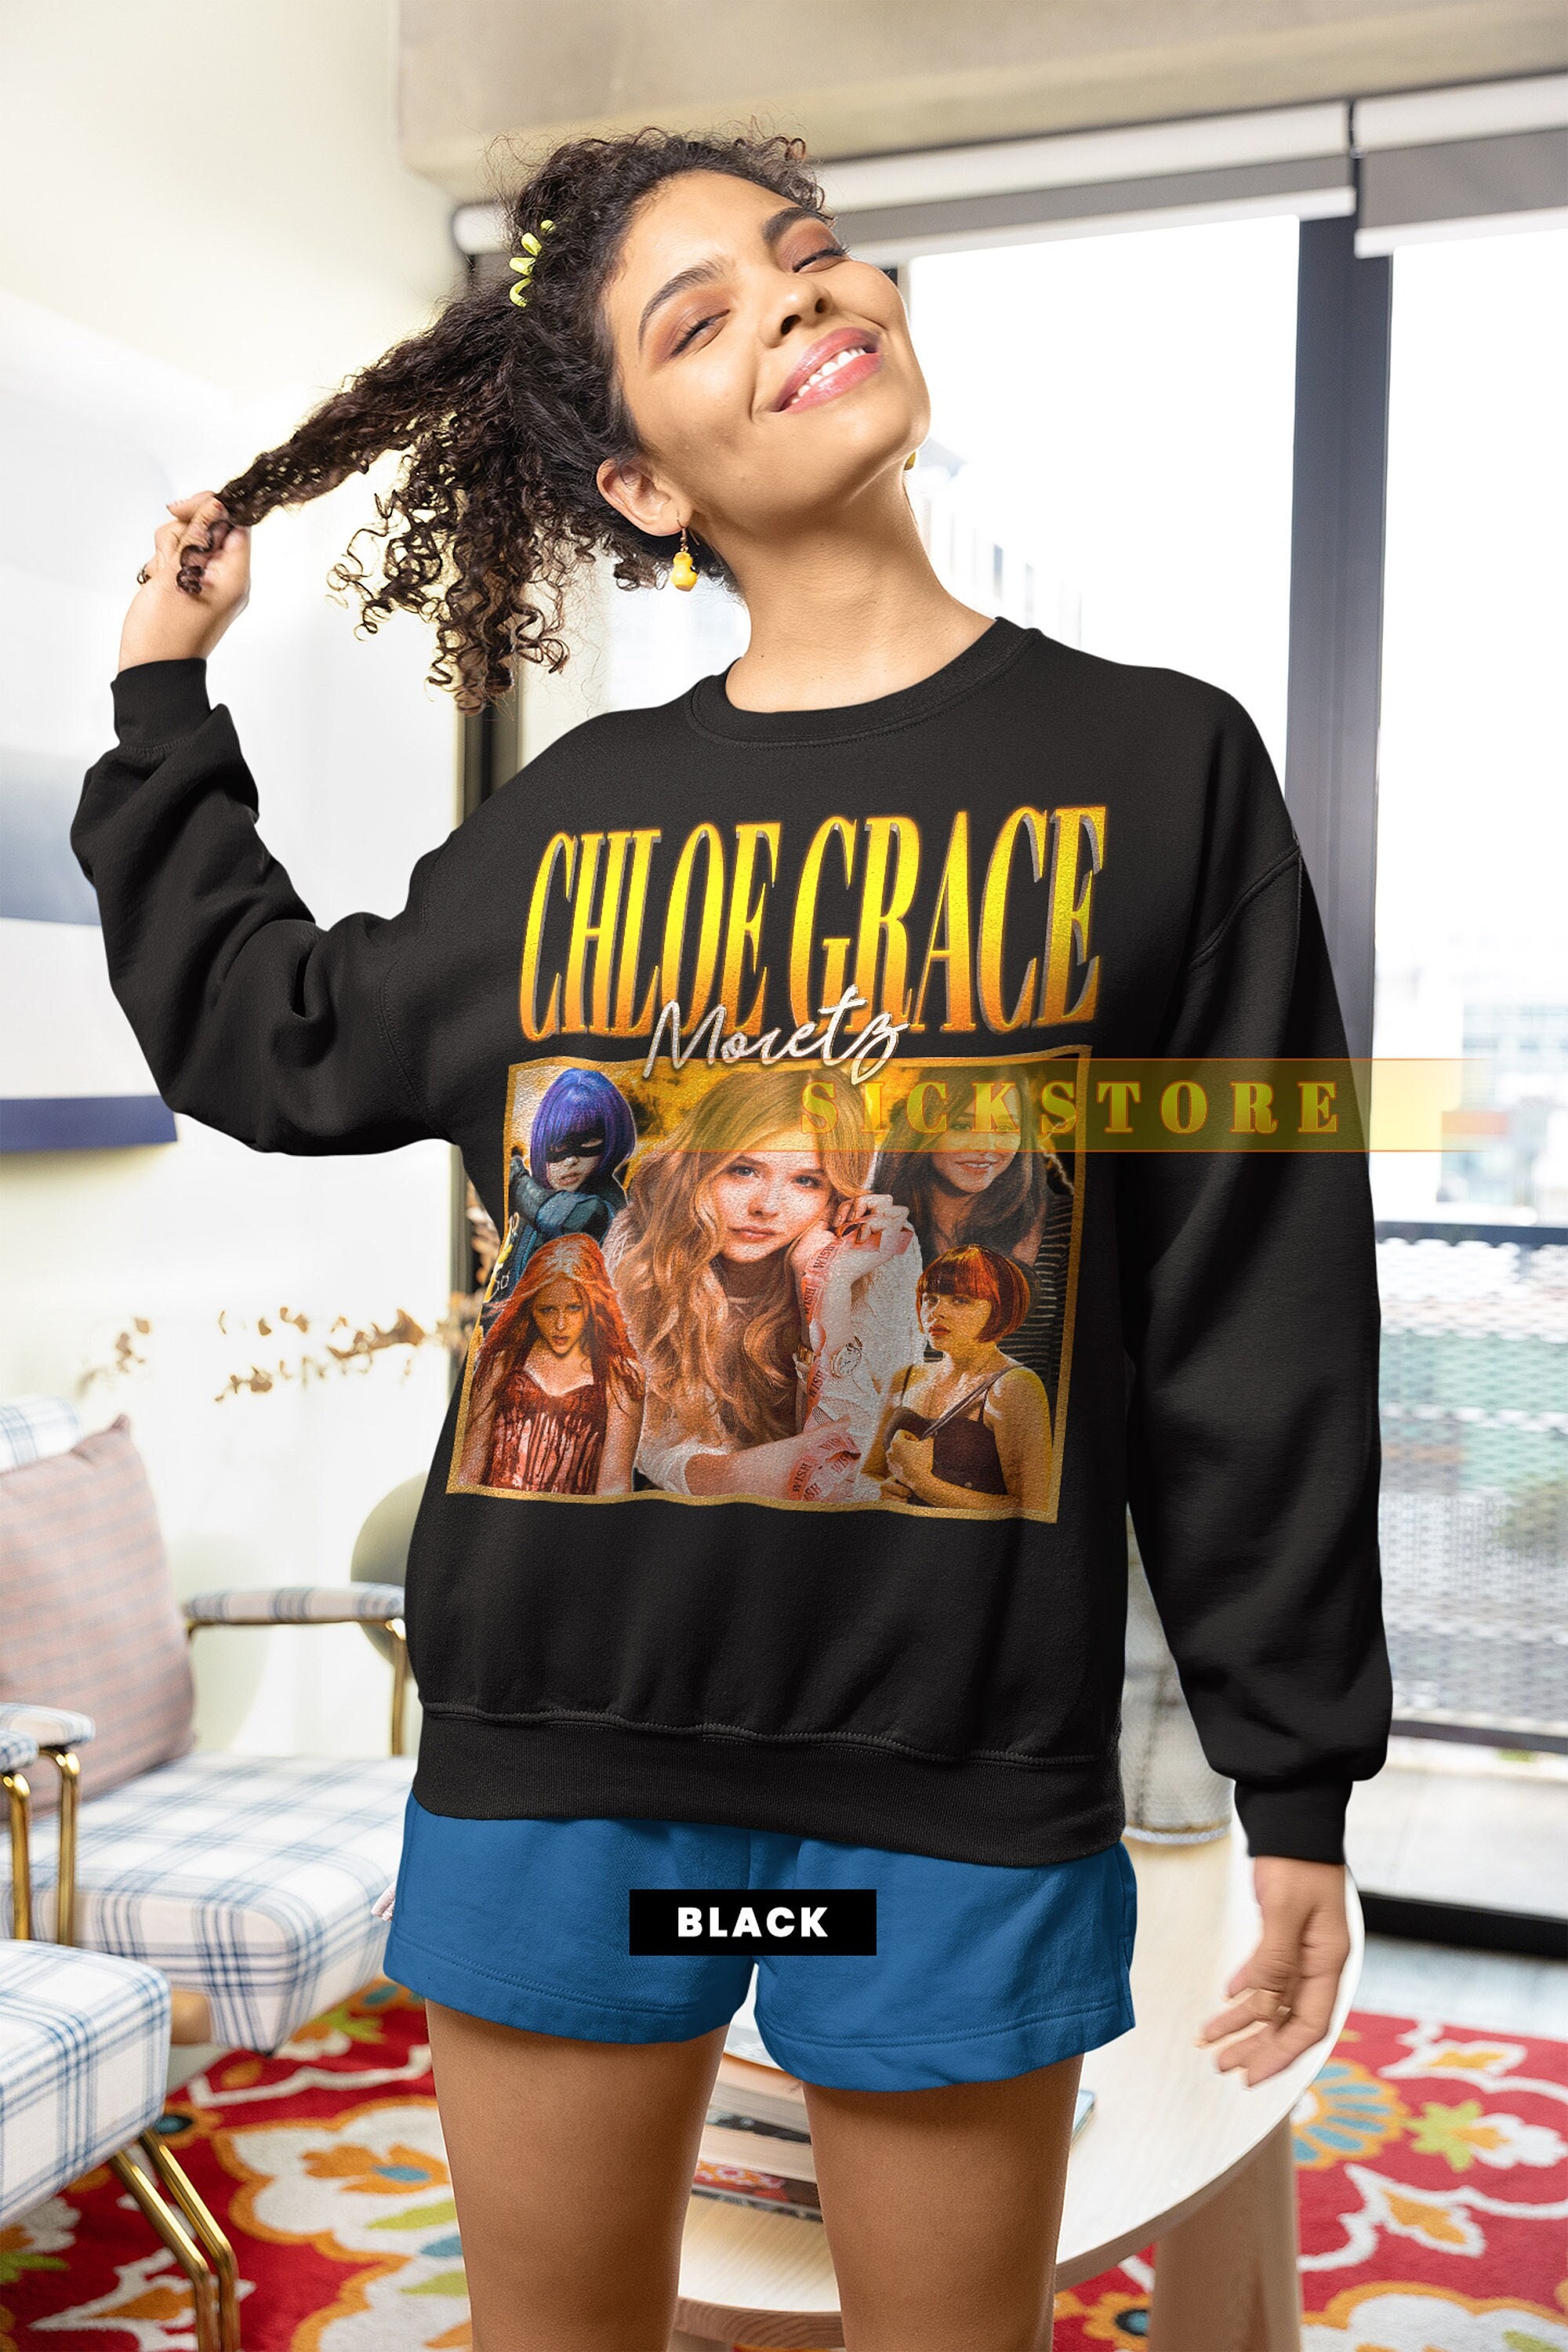 Chloe Grace Moretz sports a black hoodie and leggings while